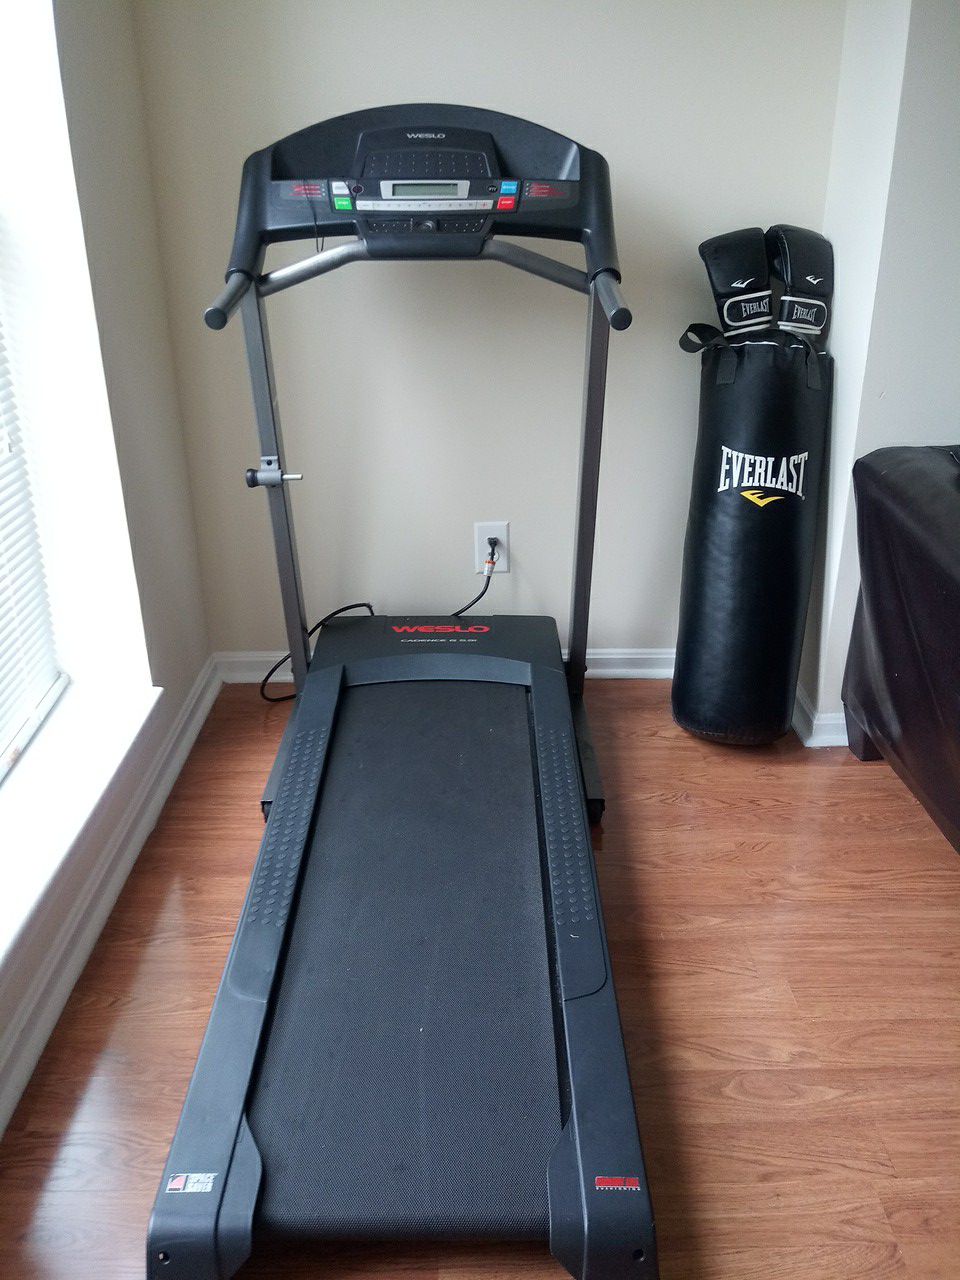 Treadmill & punching bag combo